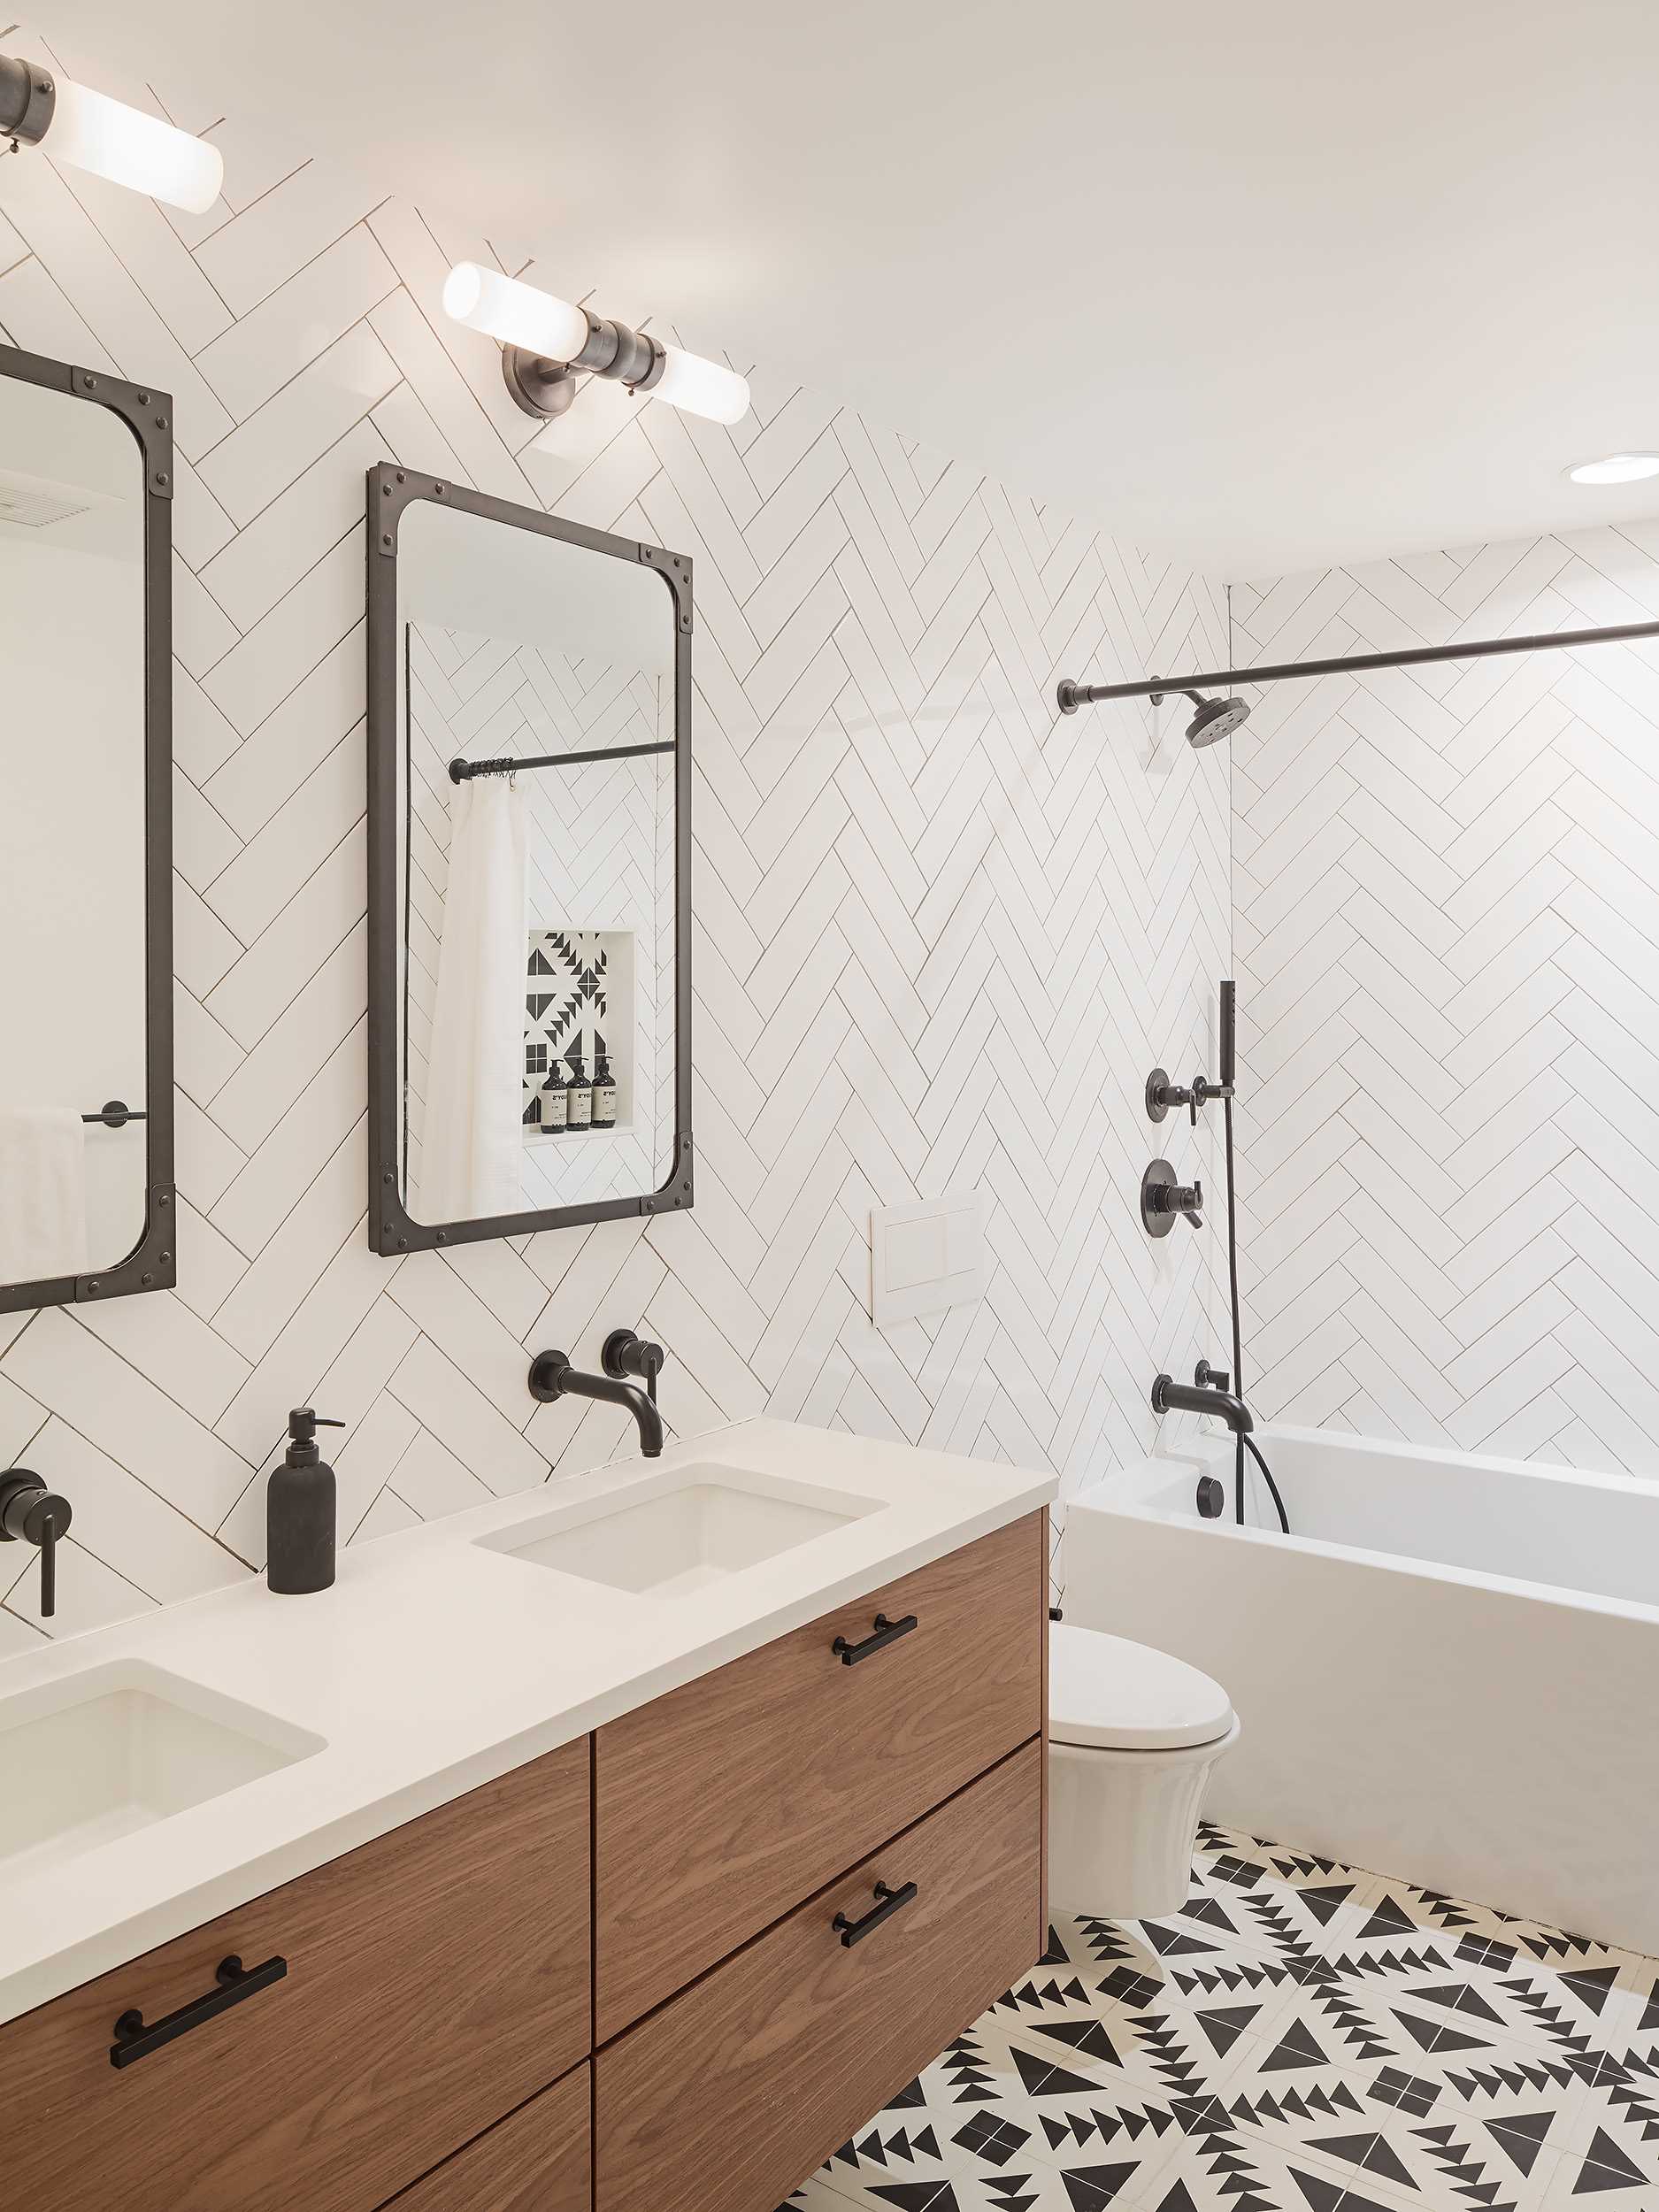 This remodeled guest bathroom has a new walnut floating vanity, herringbone wall tiles, and encaustic concrete floor tiles.